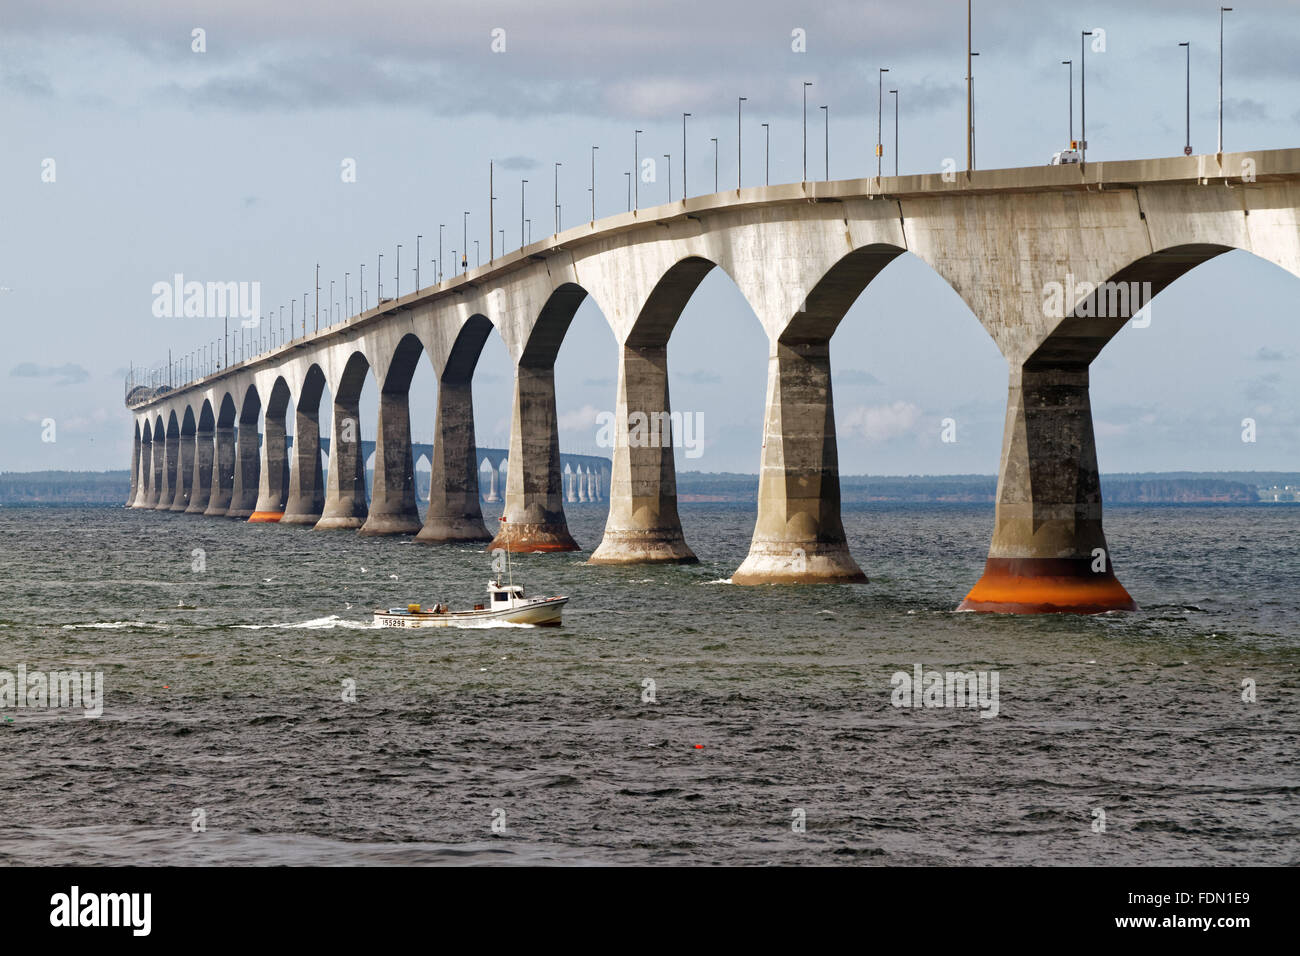 The Confederation Bridge linking Prince Edward Island with Mainland New Brunswick, Canda. The 13 km bridge opened in 1997. Stock Photo